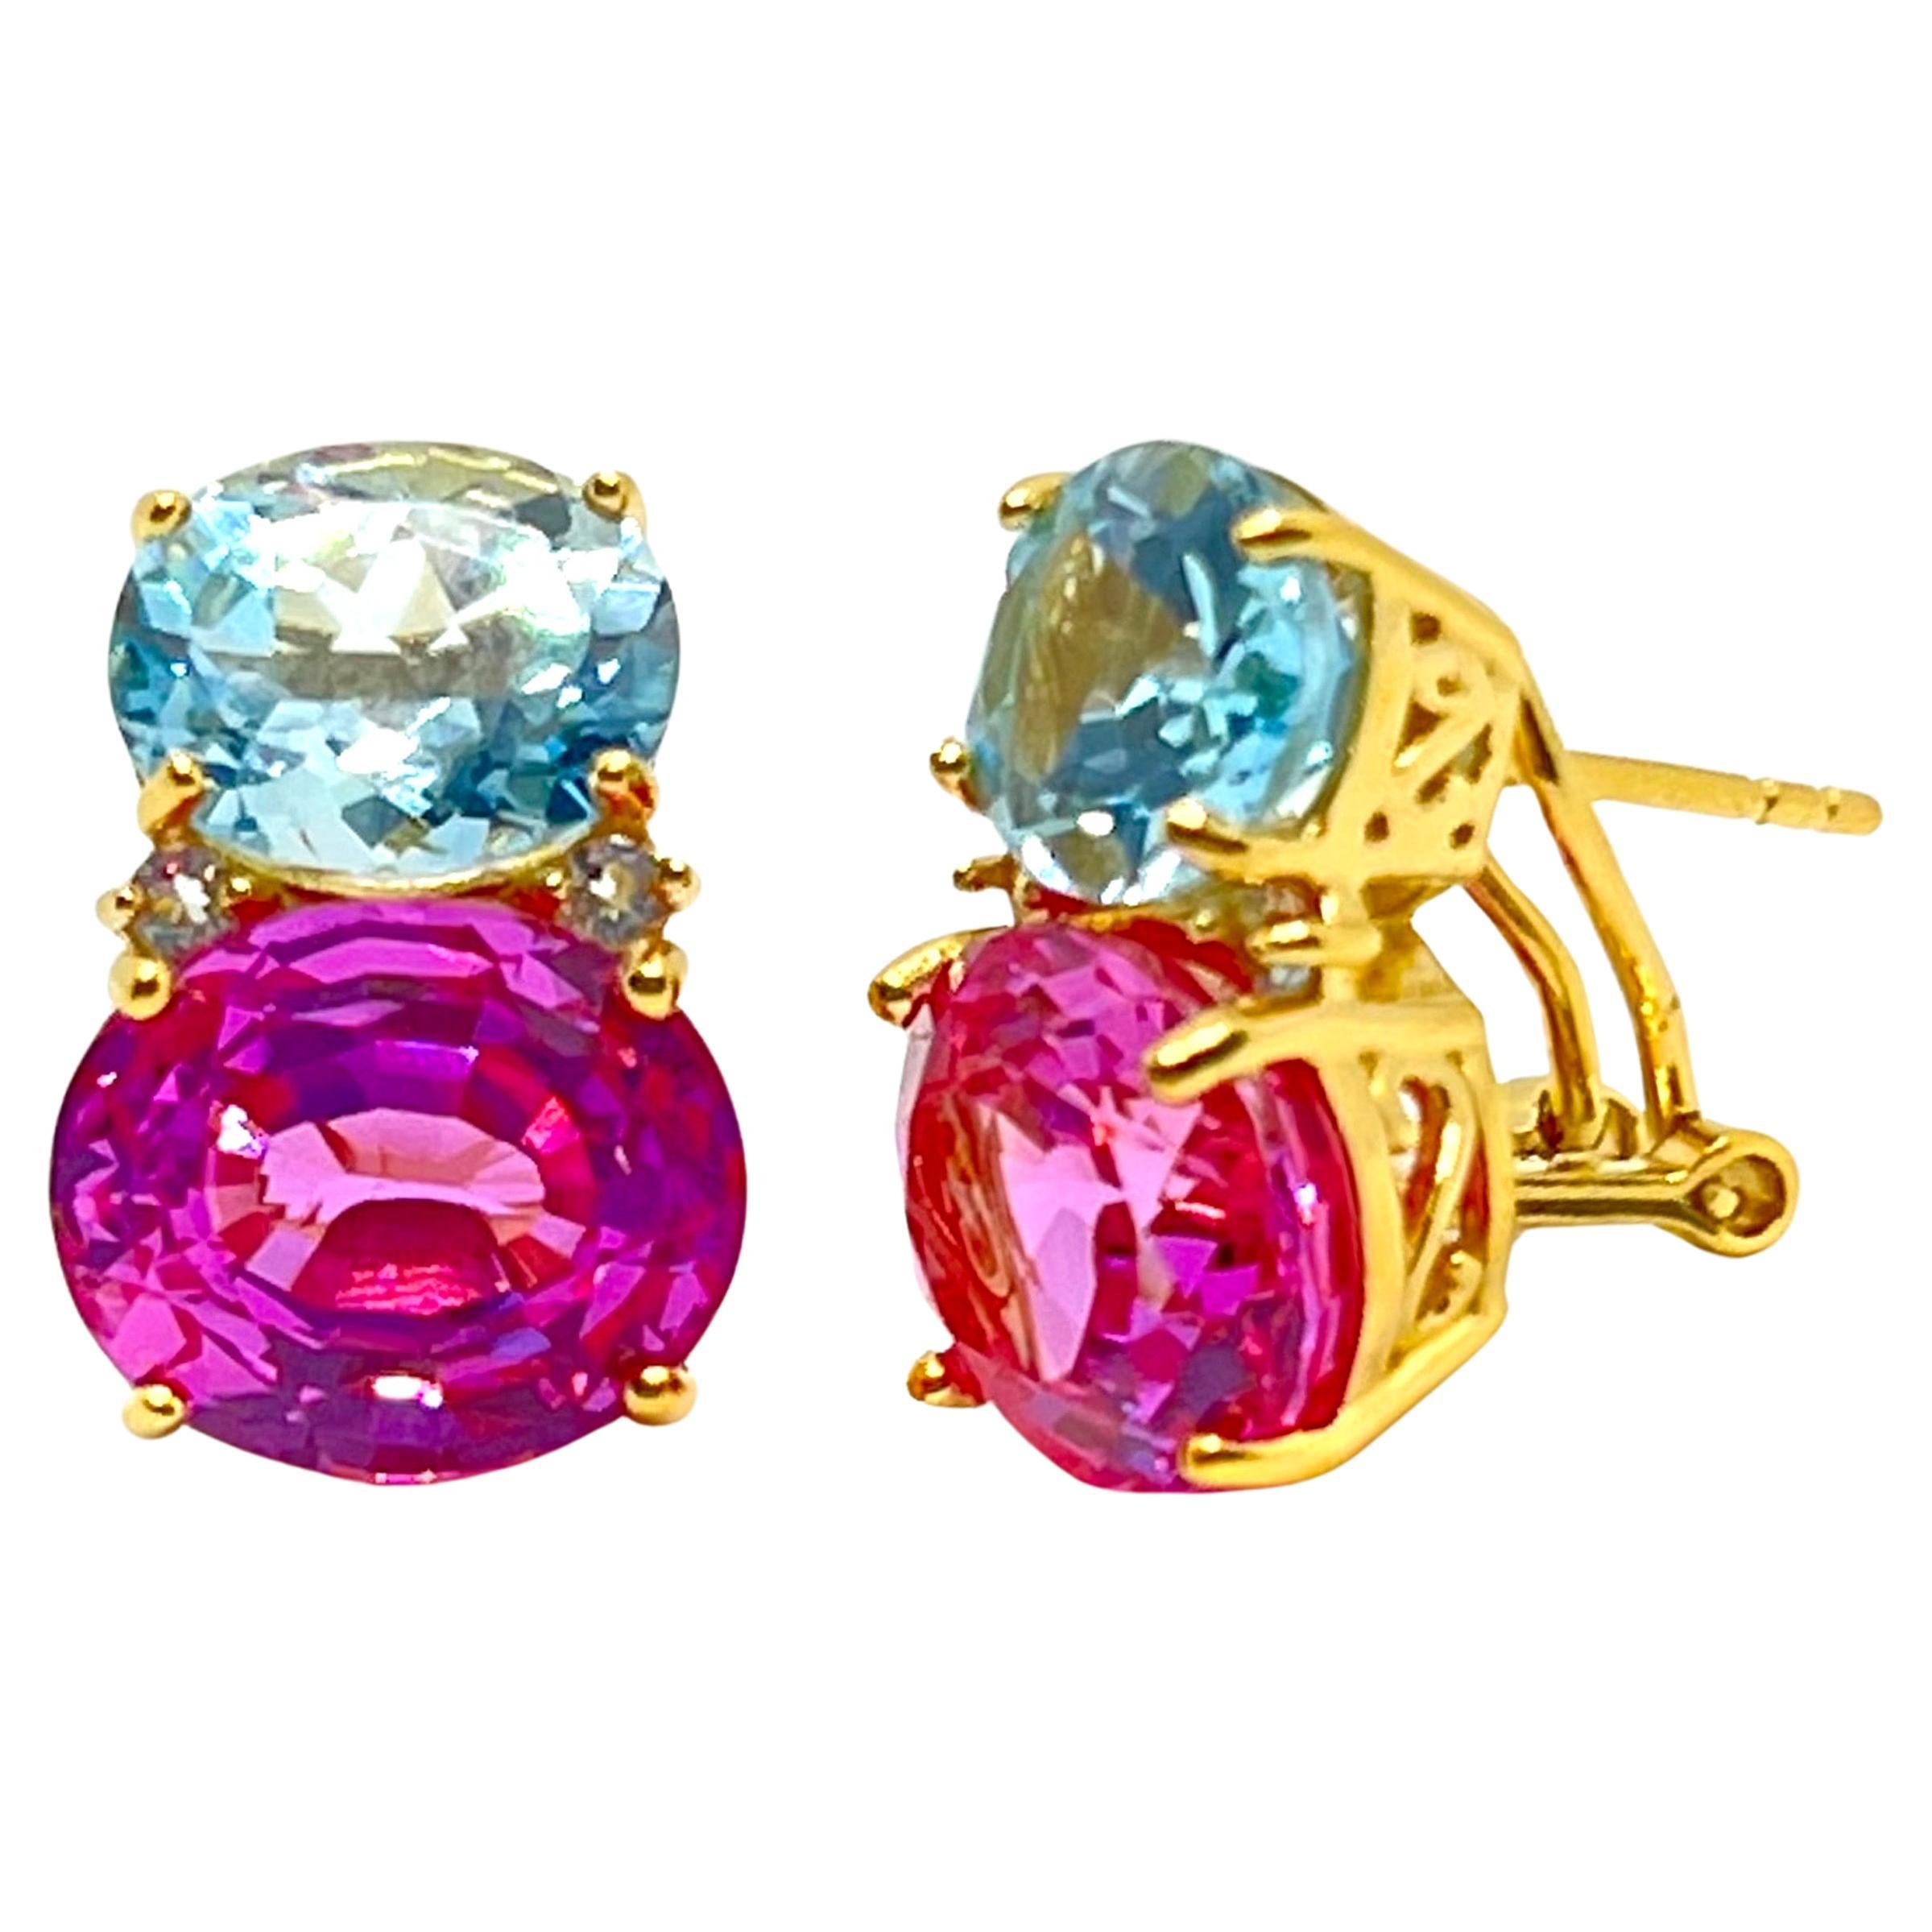 Stunning Double Oval Blue Topaz & Pink Sapphire Earrings